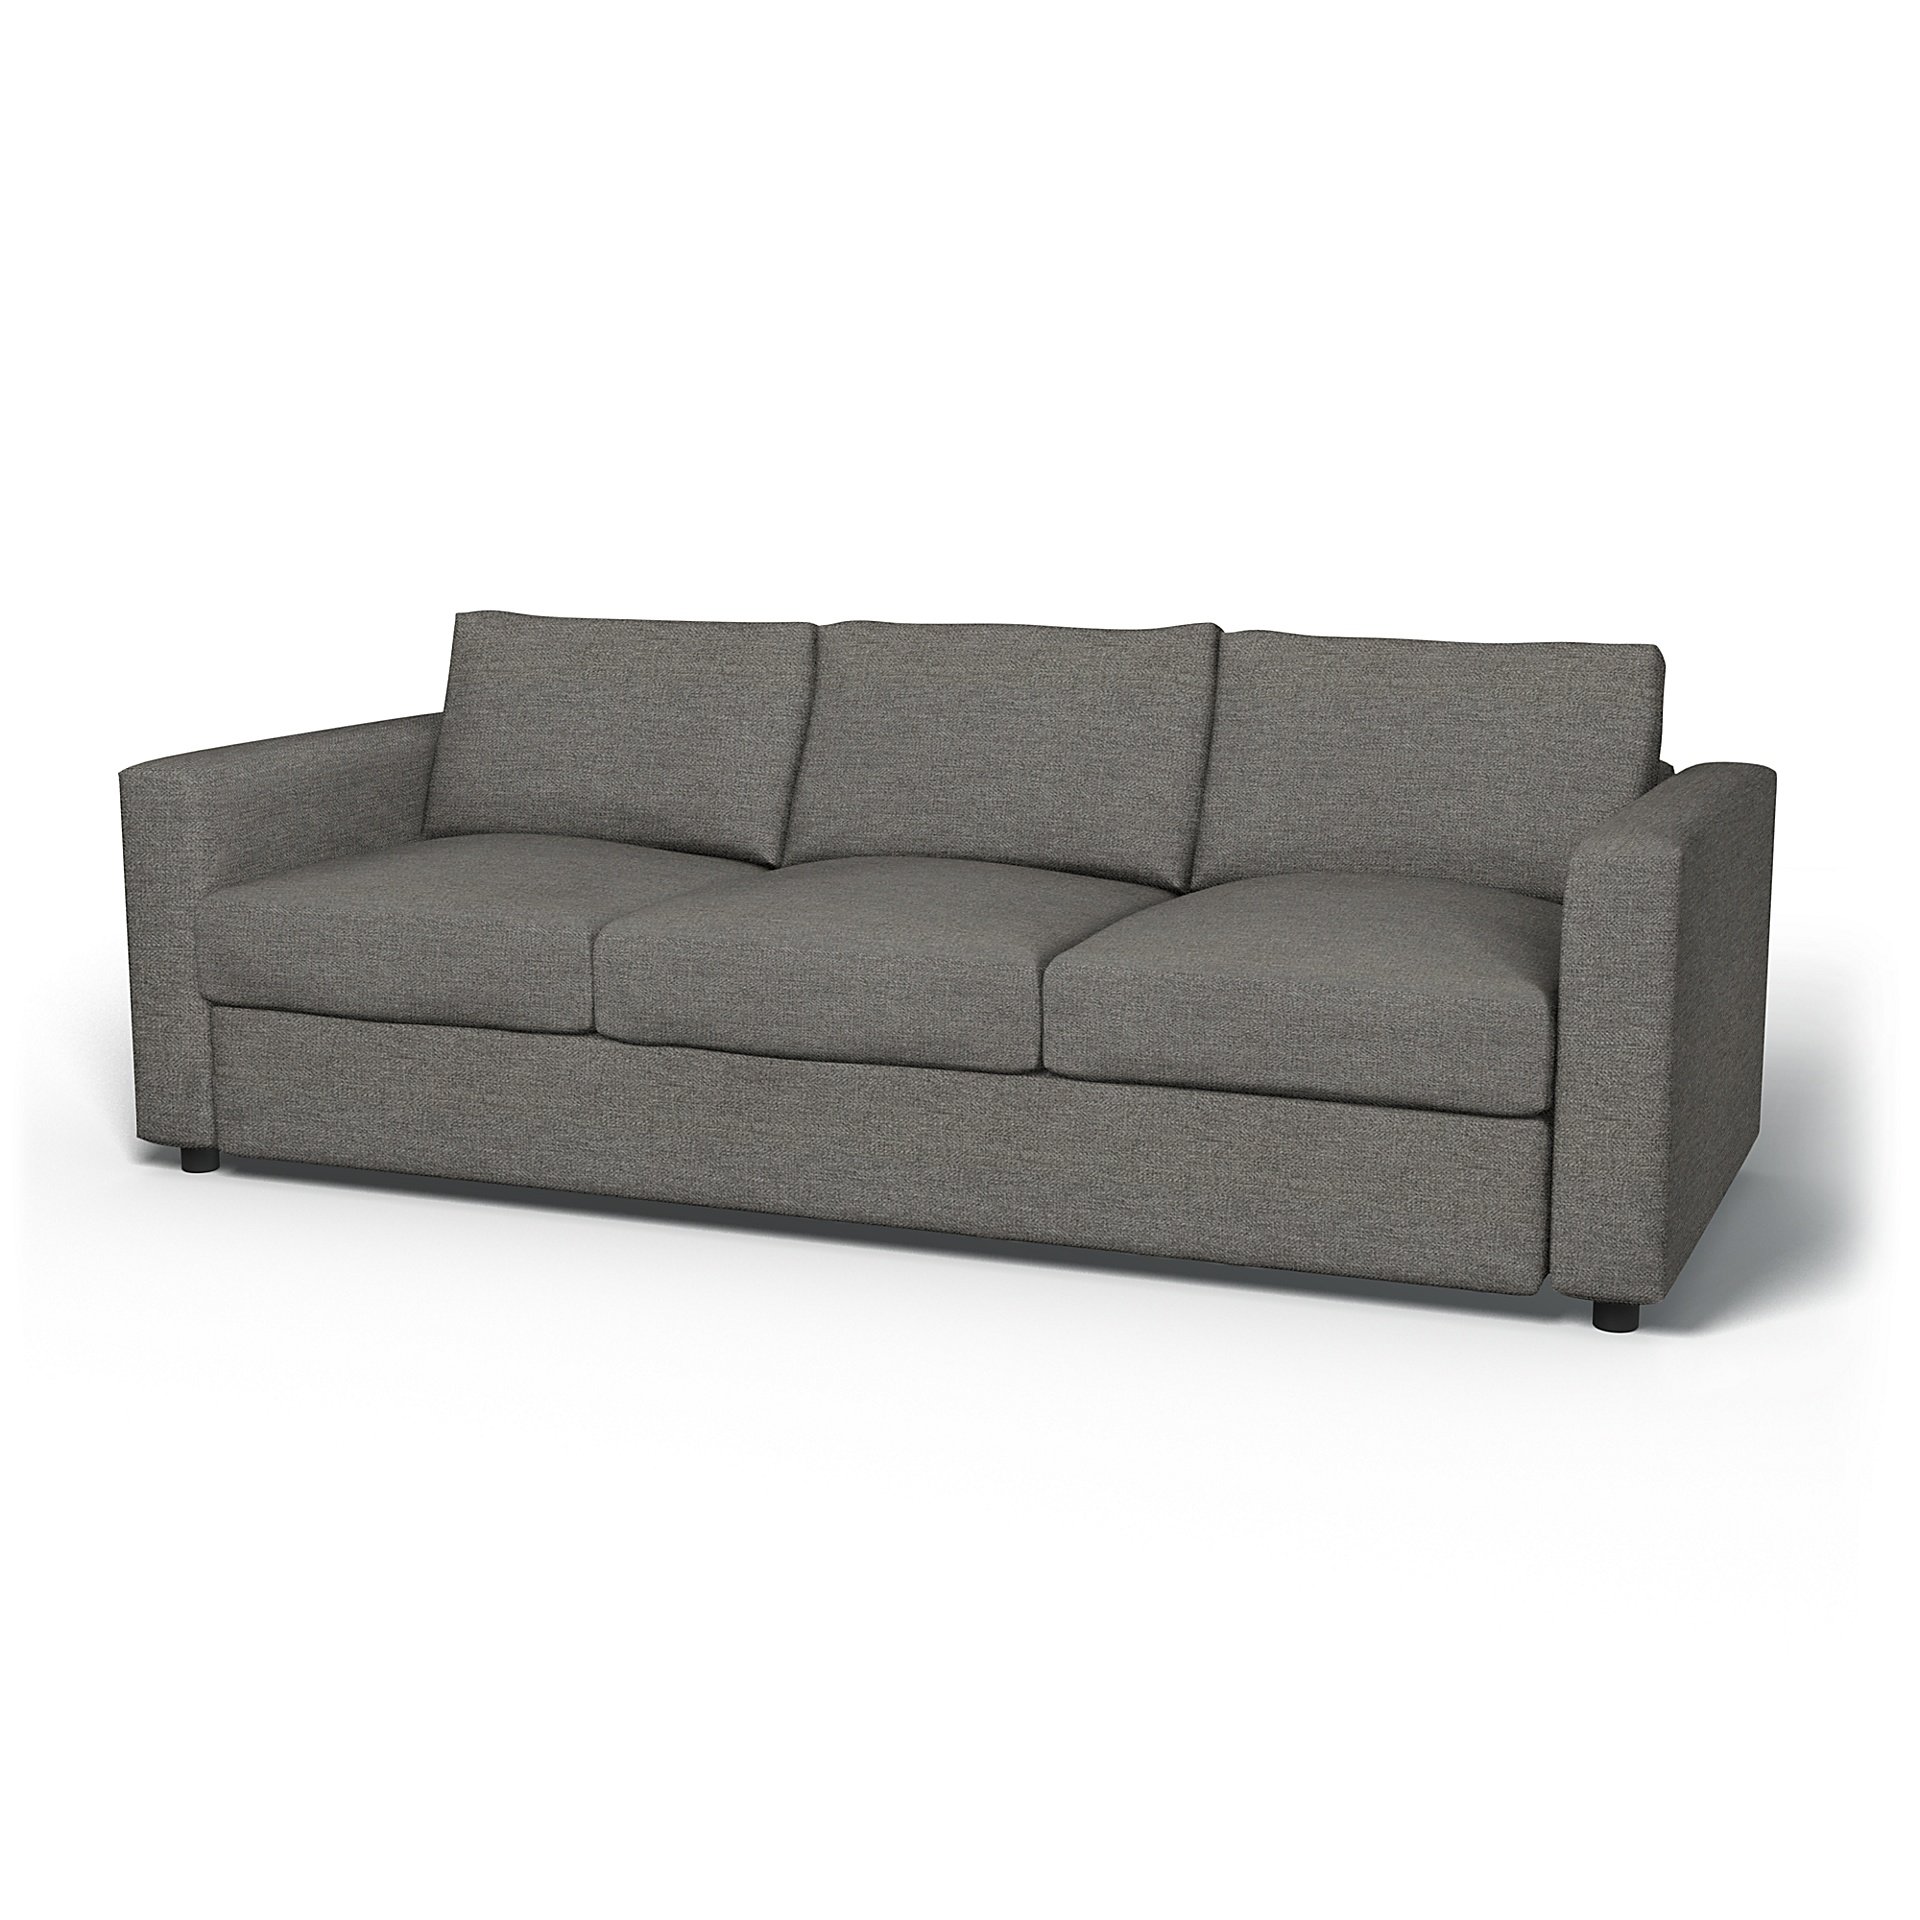 IKEA - Vimle 3 Seater Sofa Cover, Taupe, Boucle & Texture - Bemz